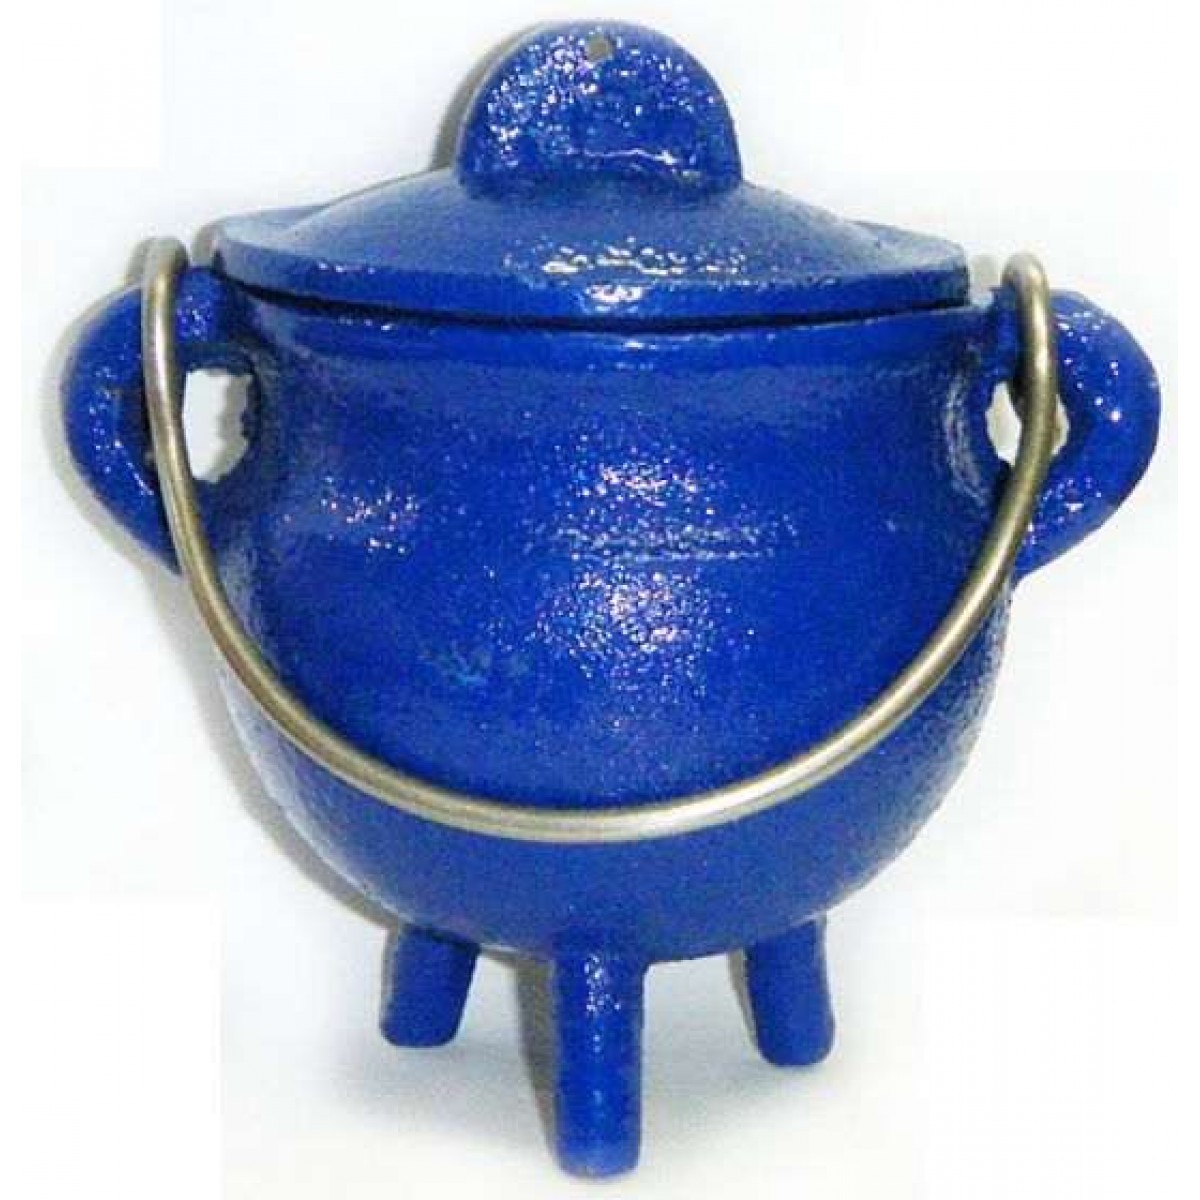 https://www.mysticconvergence.com/image/cache/catalog/indiaimports/BR81B-blue-cast-iron-cauldron-with-lid-1200x1200.jpg